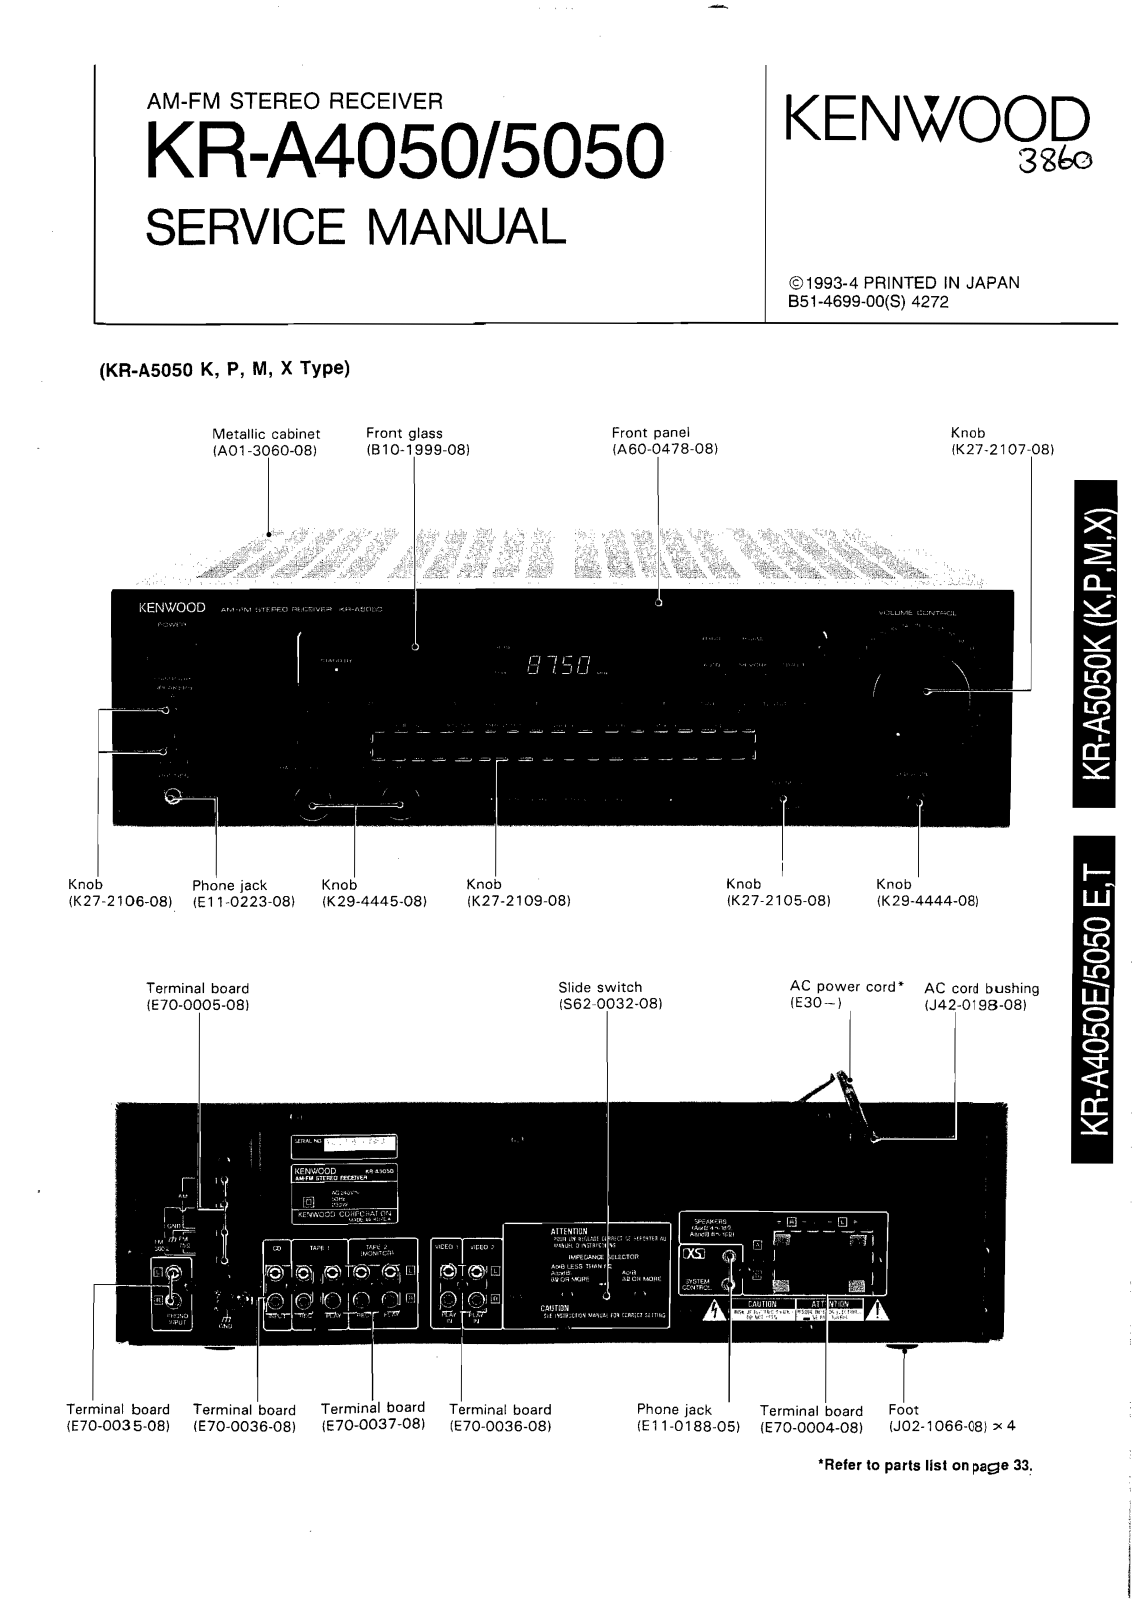 Kenwood KR-A5050, KR-A4050 Service Manual